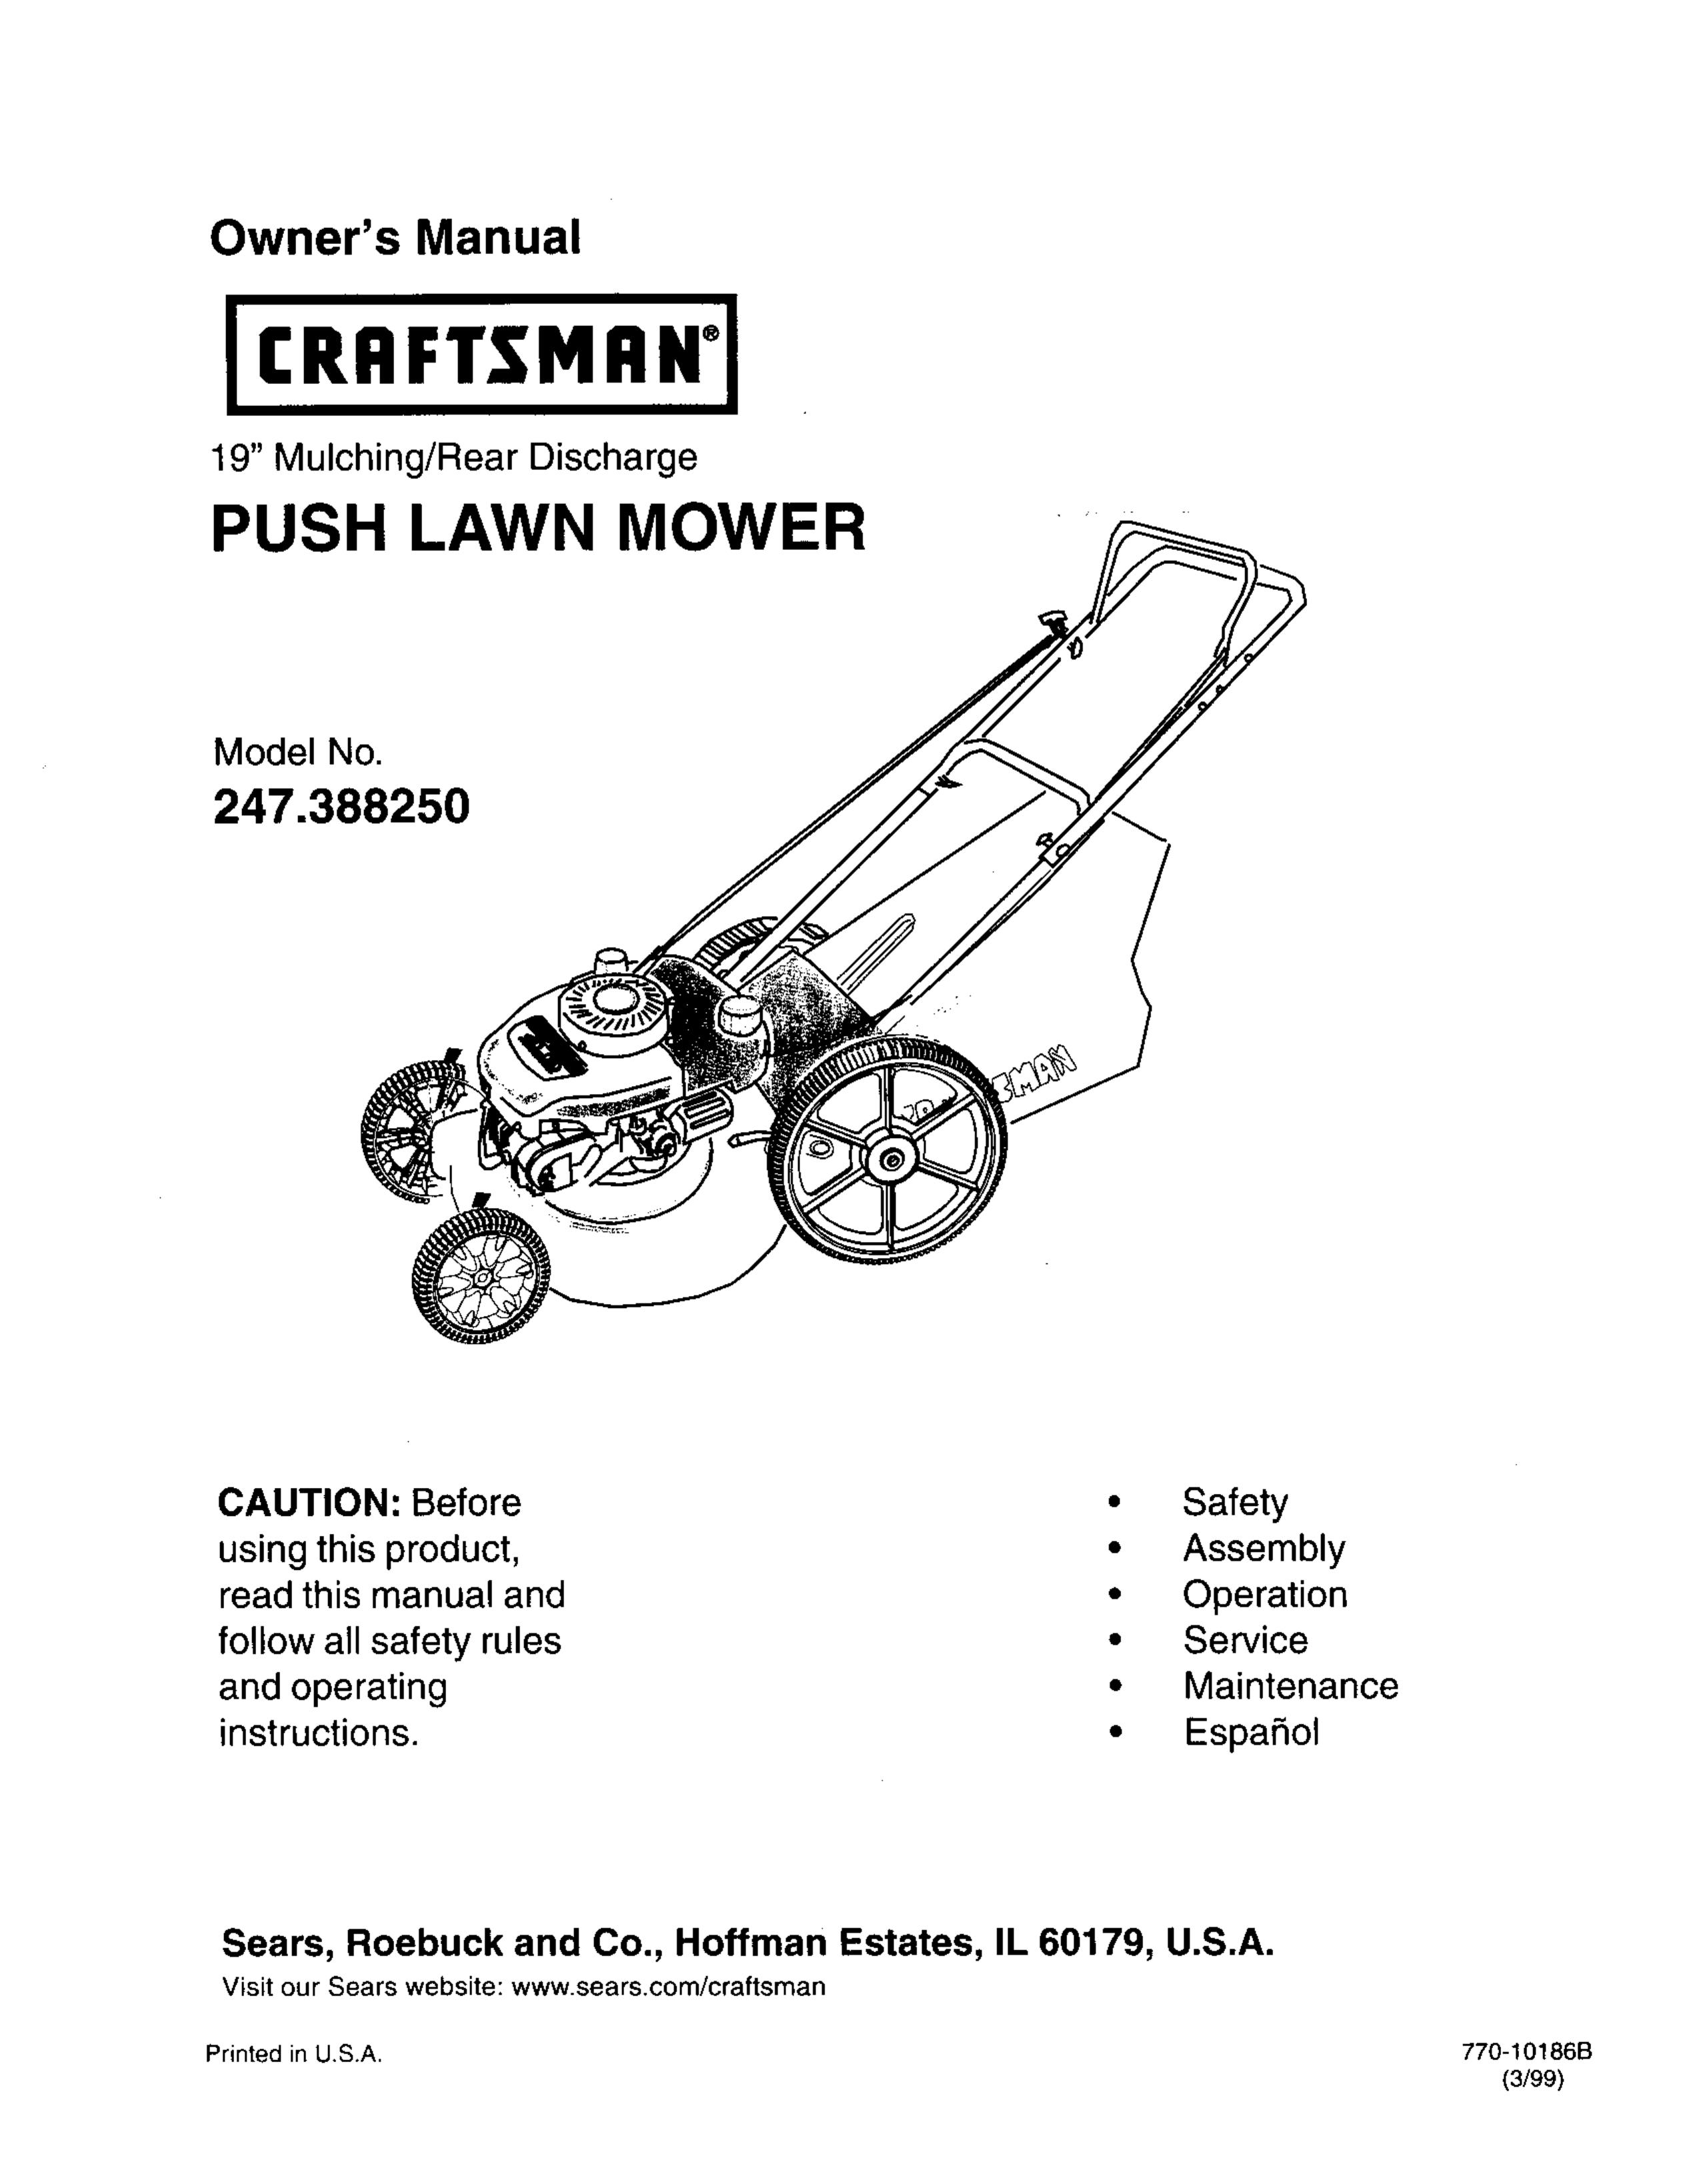 Craftsman 247.388250 Lawn Mower User Manual